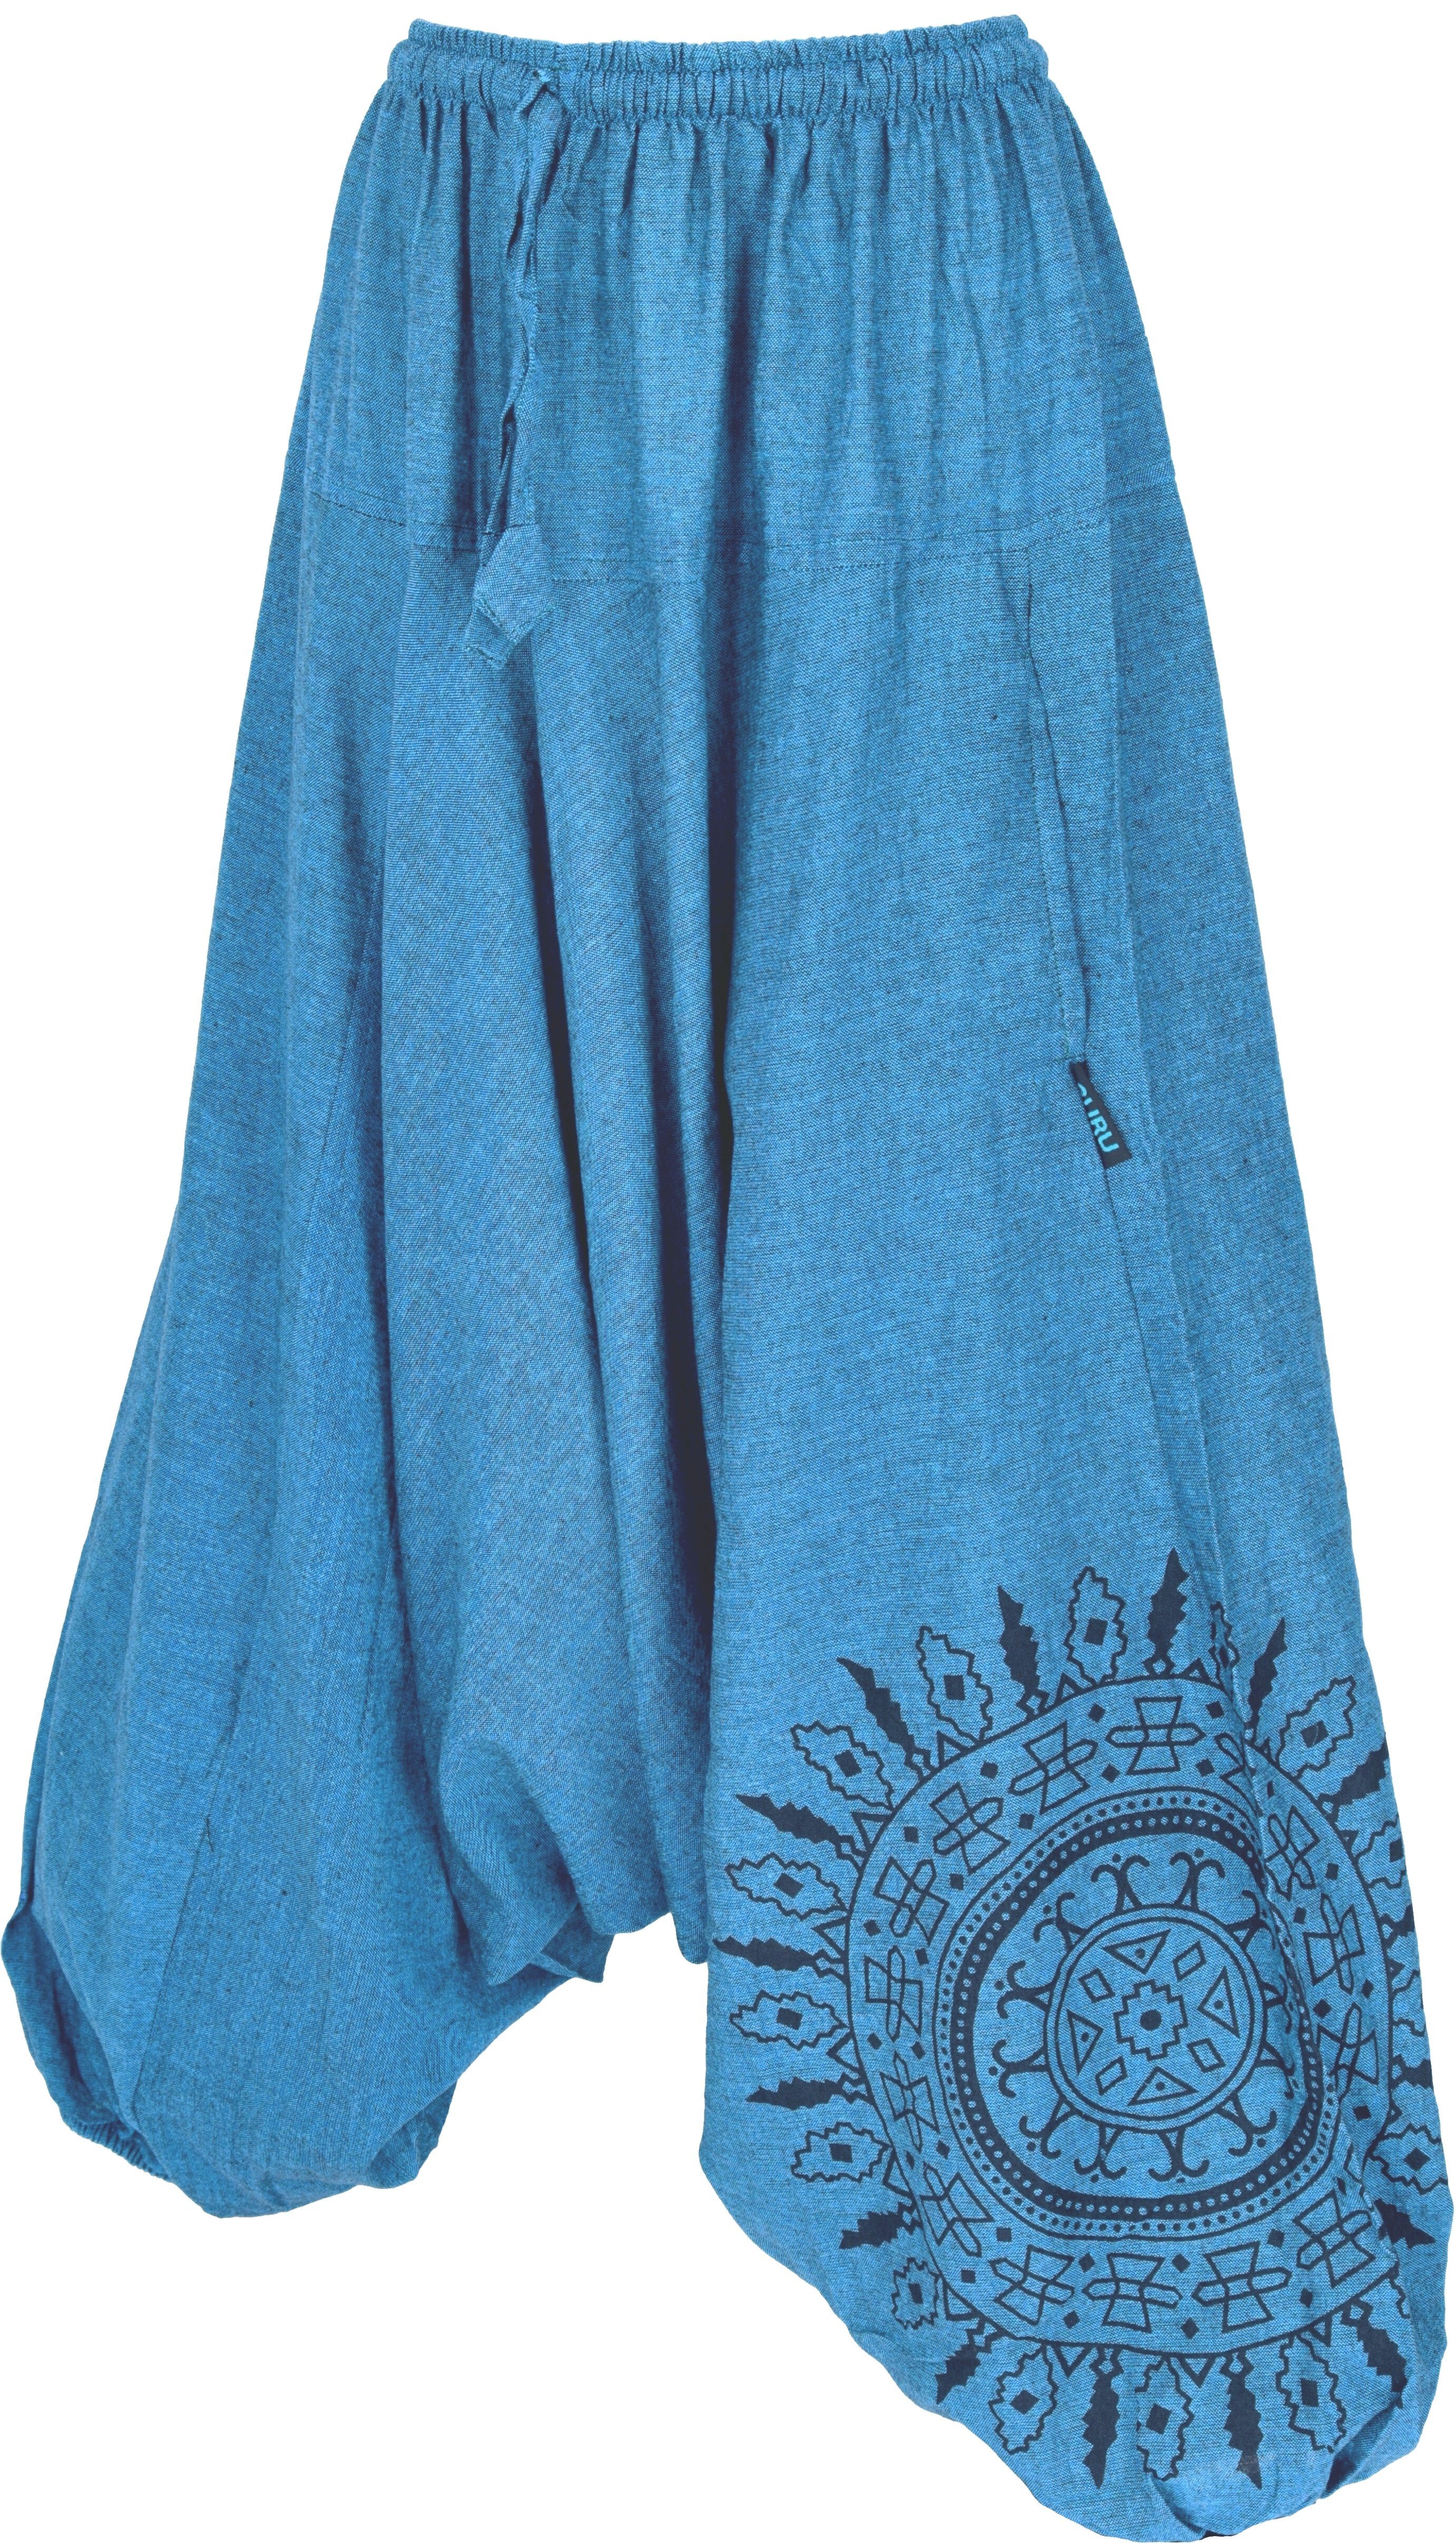 Guru-Shop Haremshose mit Relaxhose blau Mandala,.. Bekleidung Style, Pumphose Pluderhose, alternative Ethno